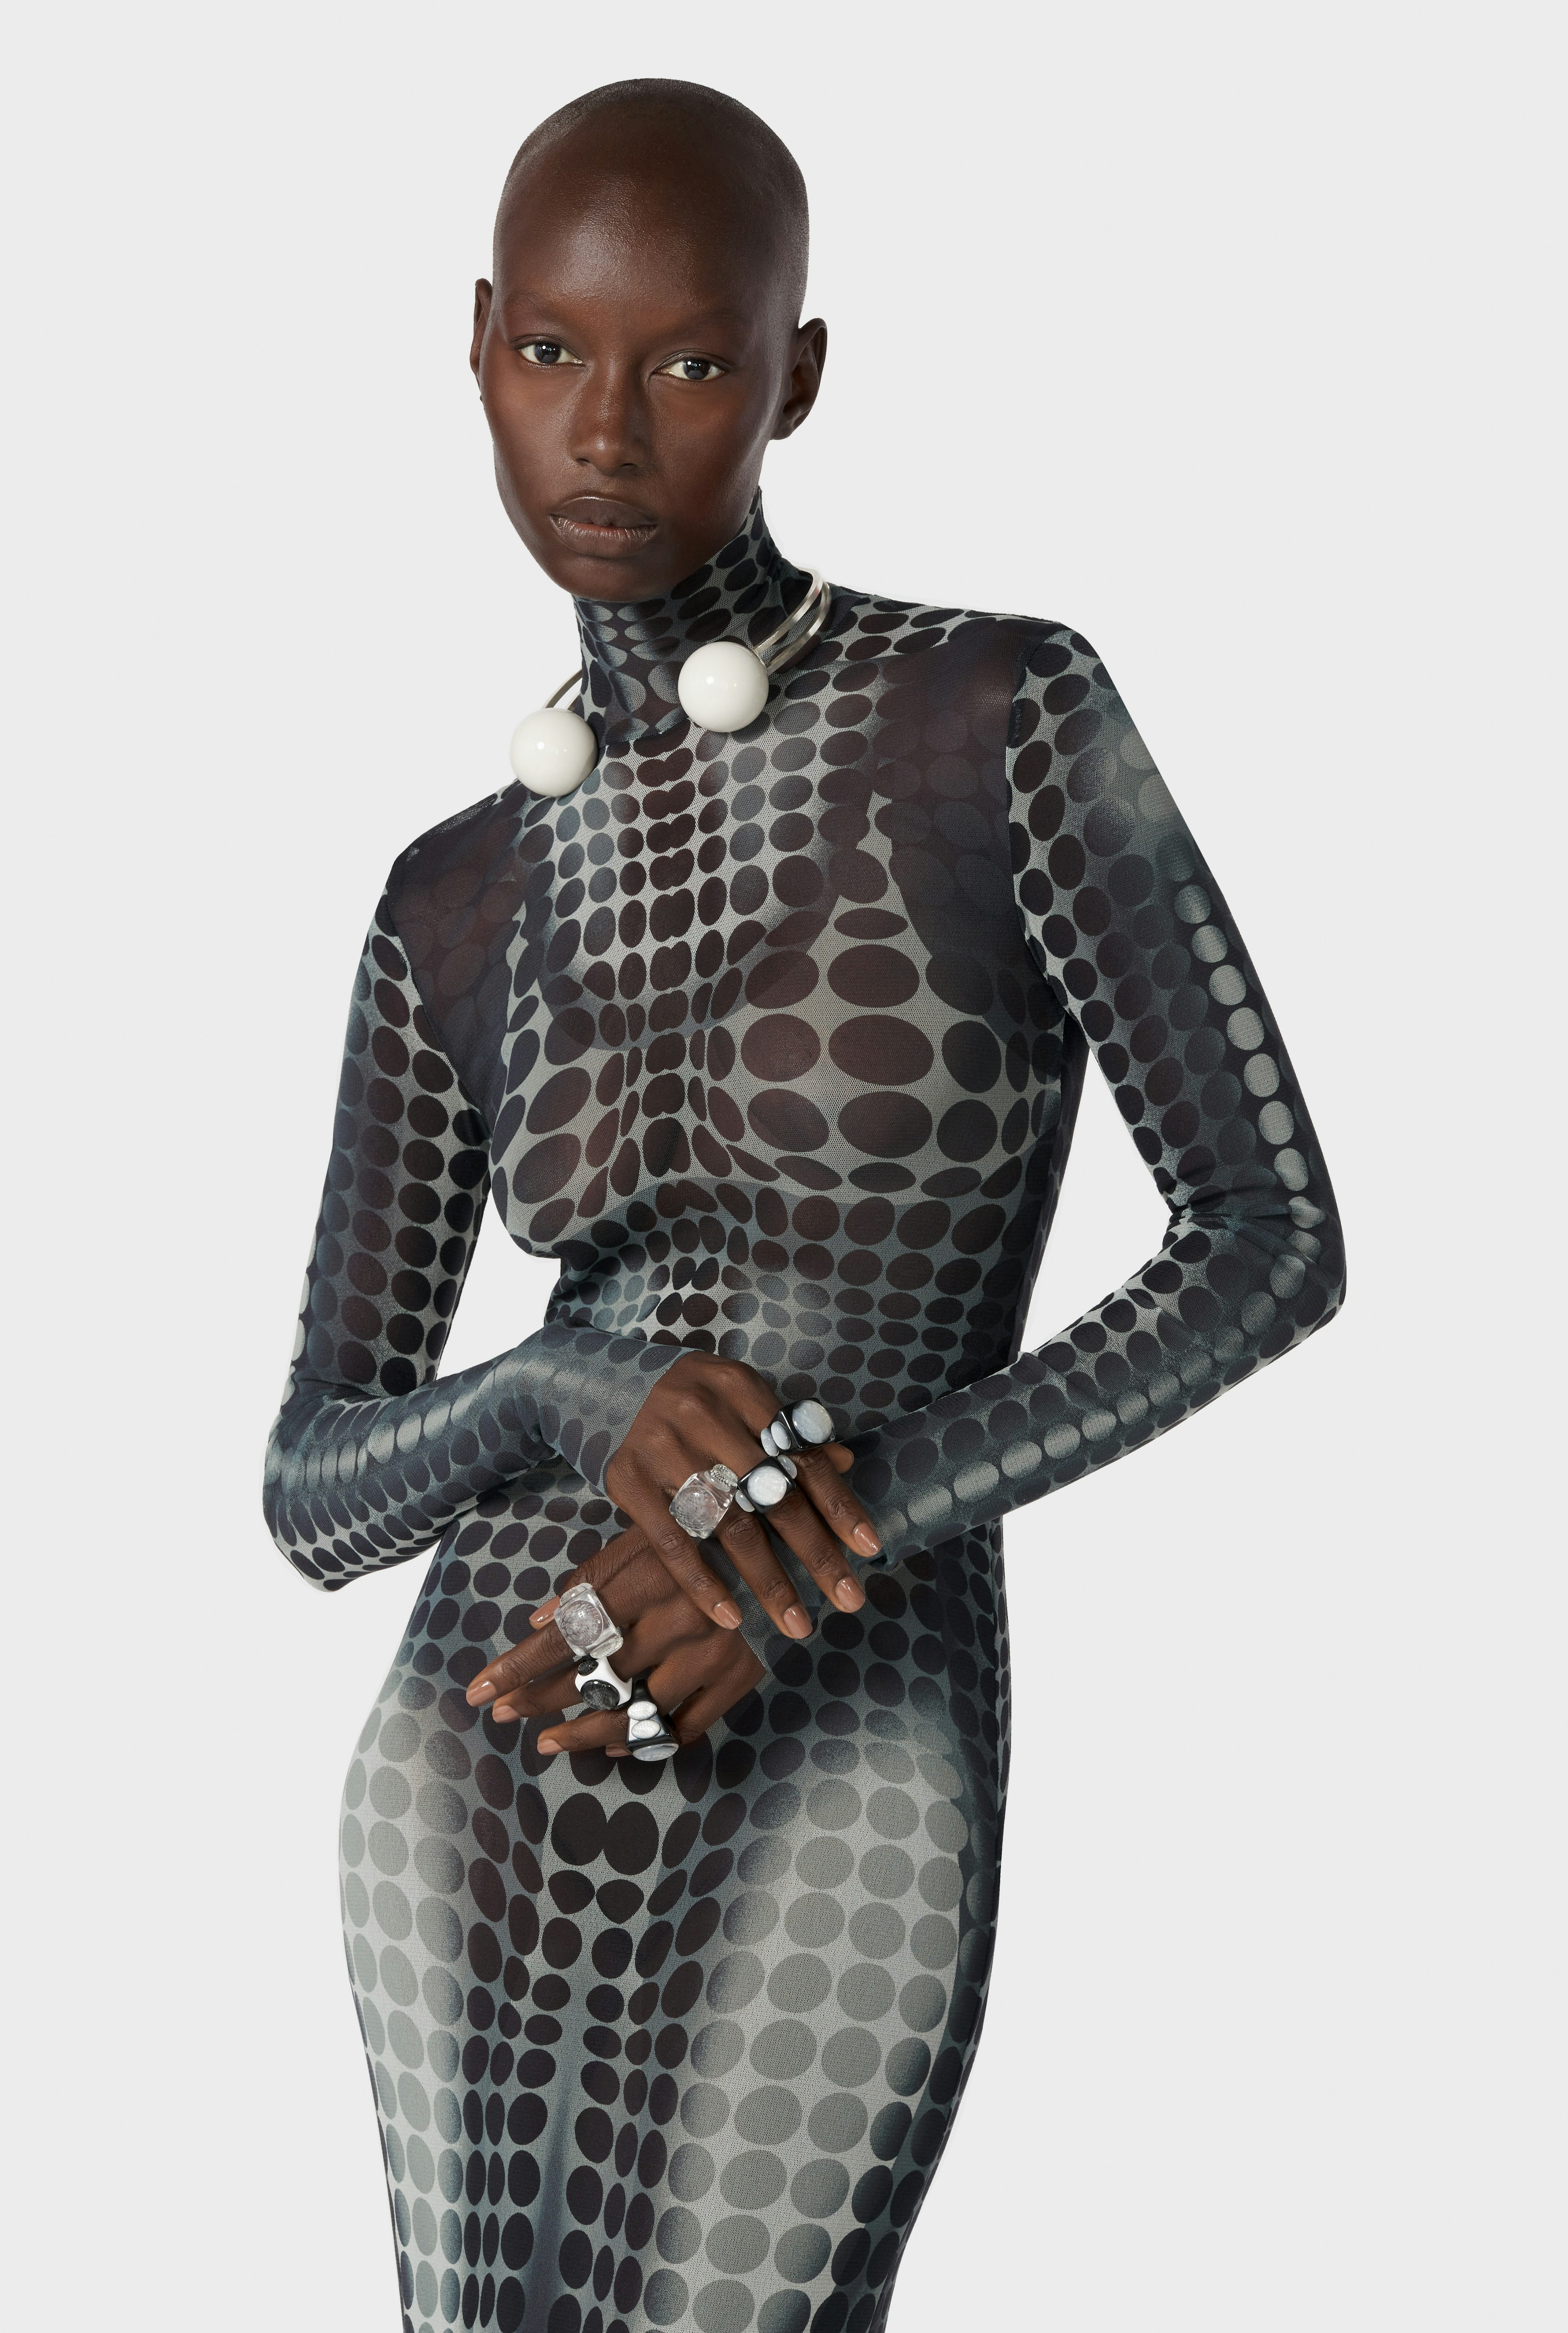 The Black & White dots Print Dress Jean Paul Gaultier